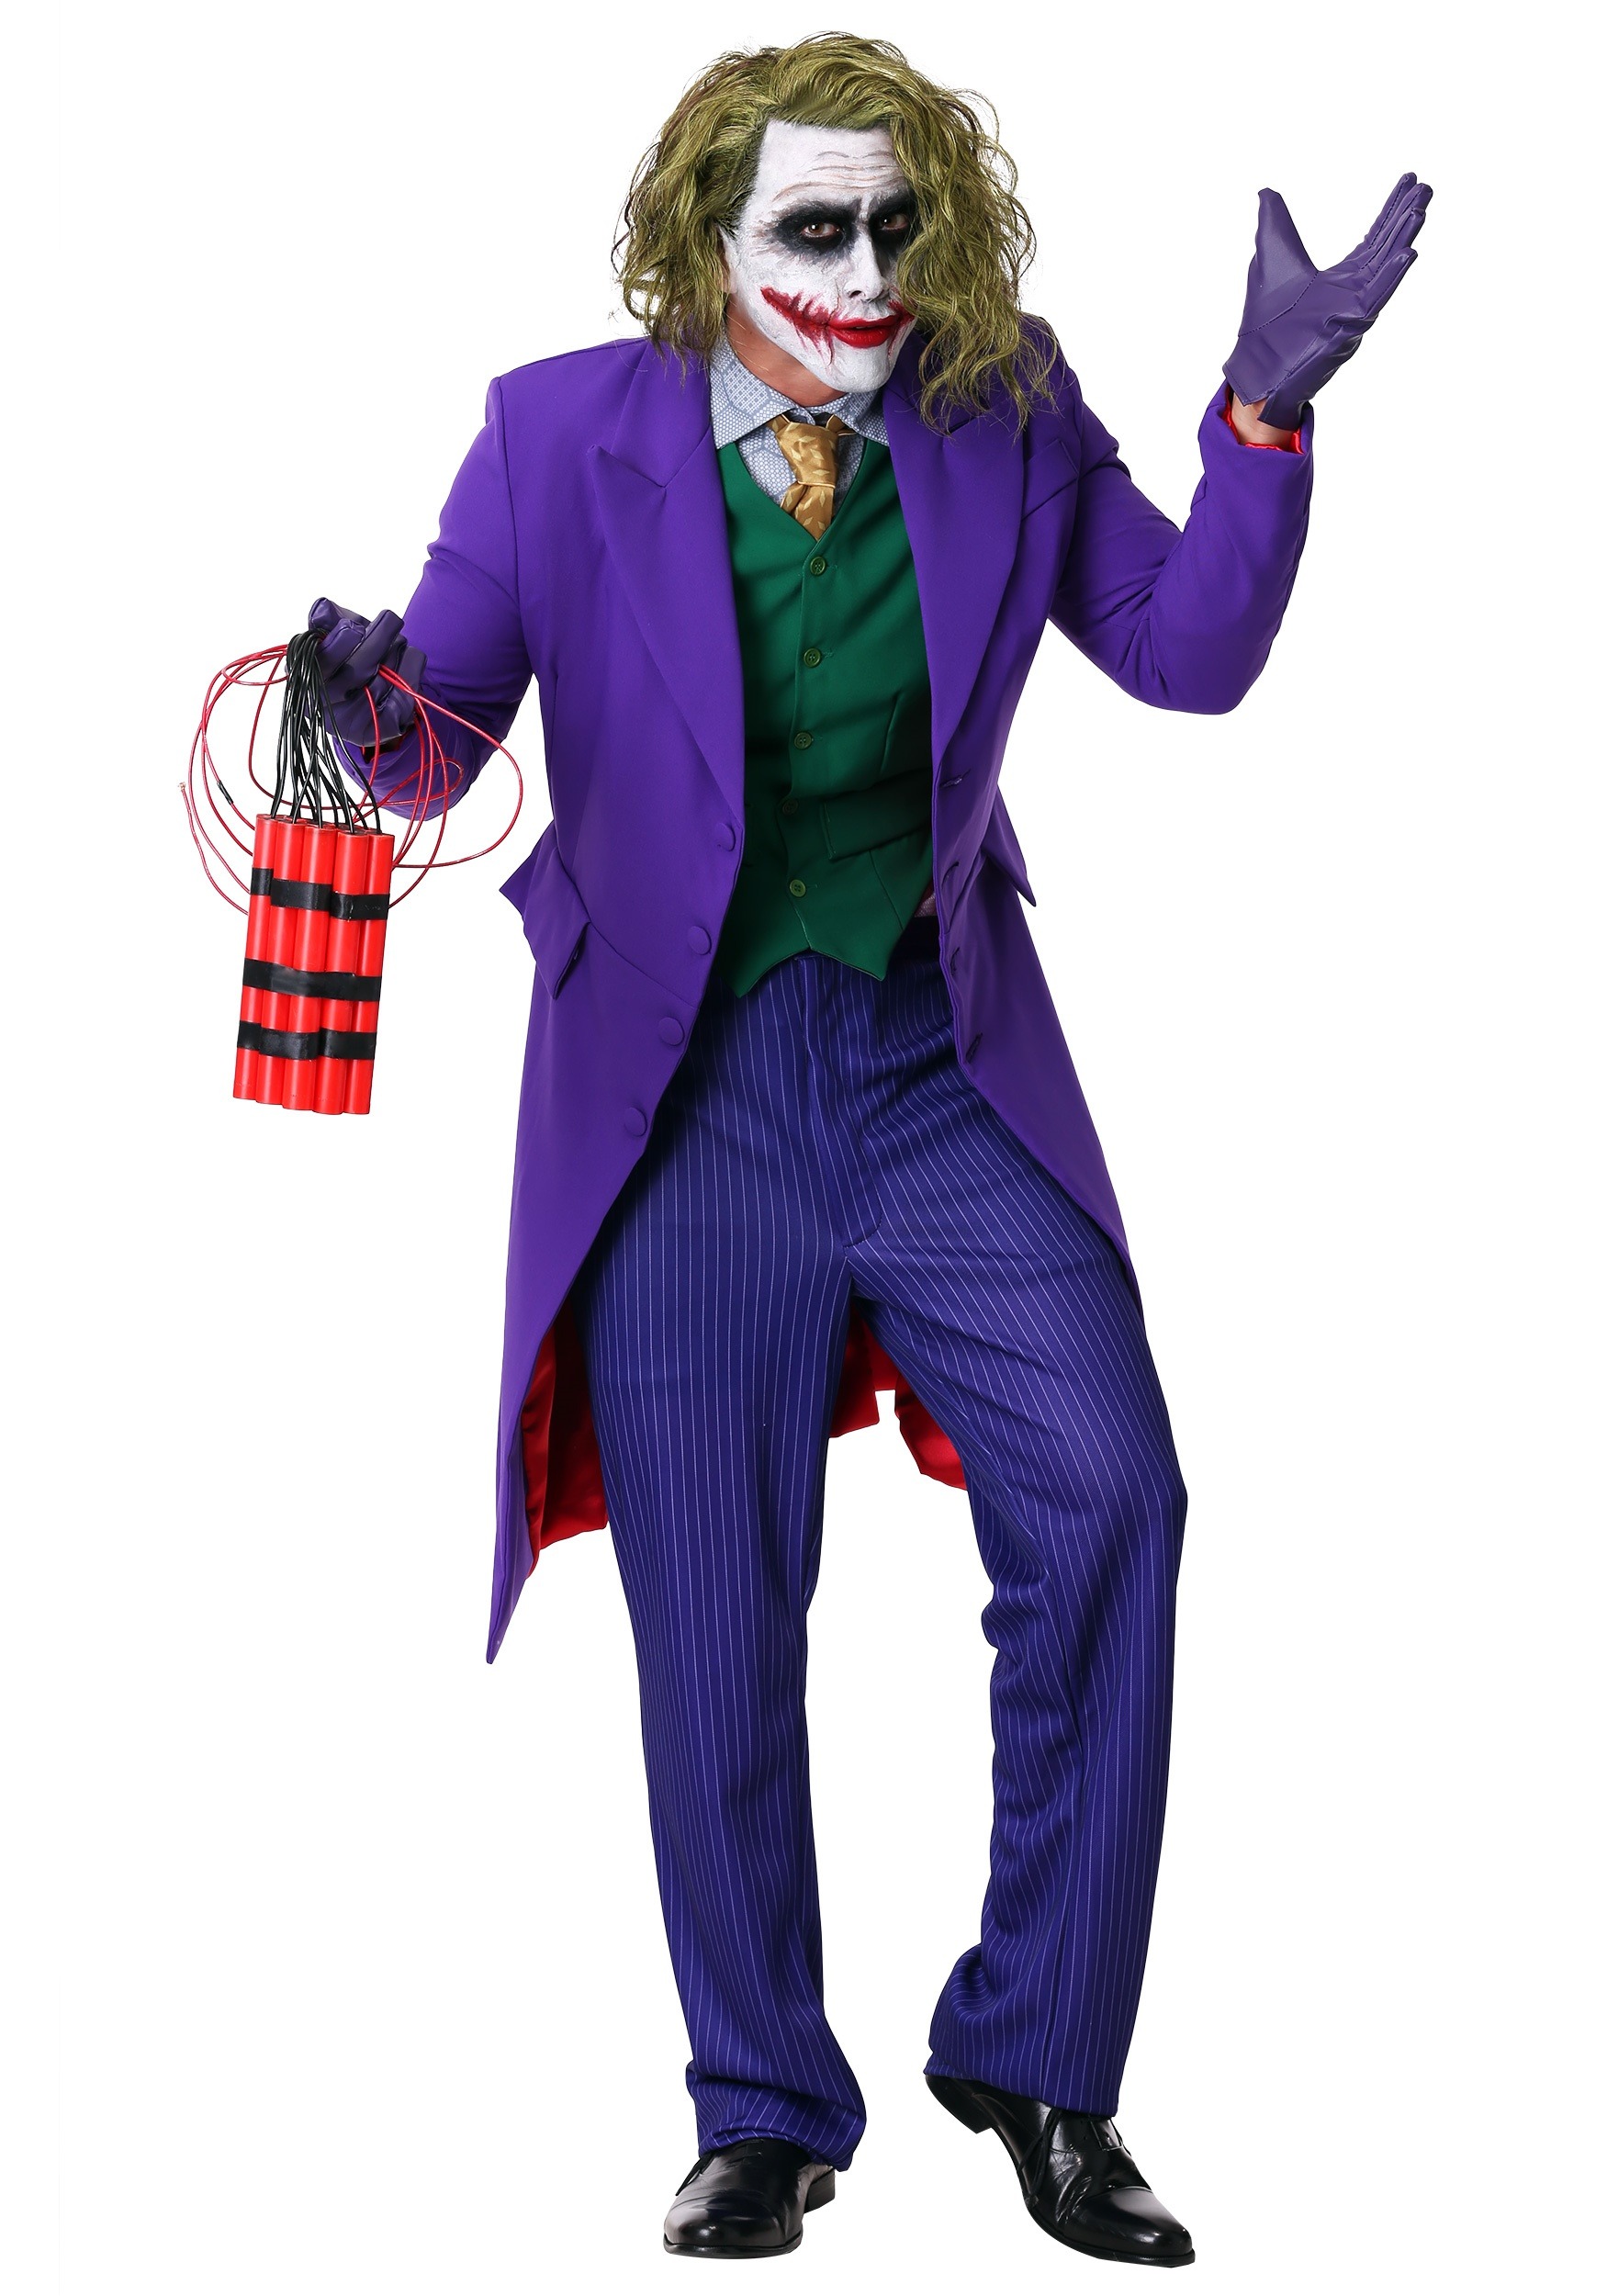 Grand Heritage Joker Costume - Adult Dark Knight Joker Costumes